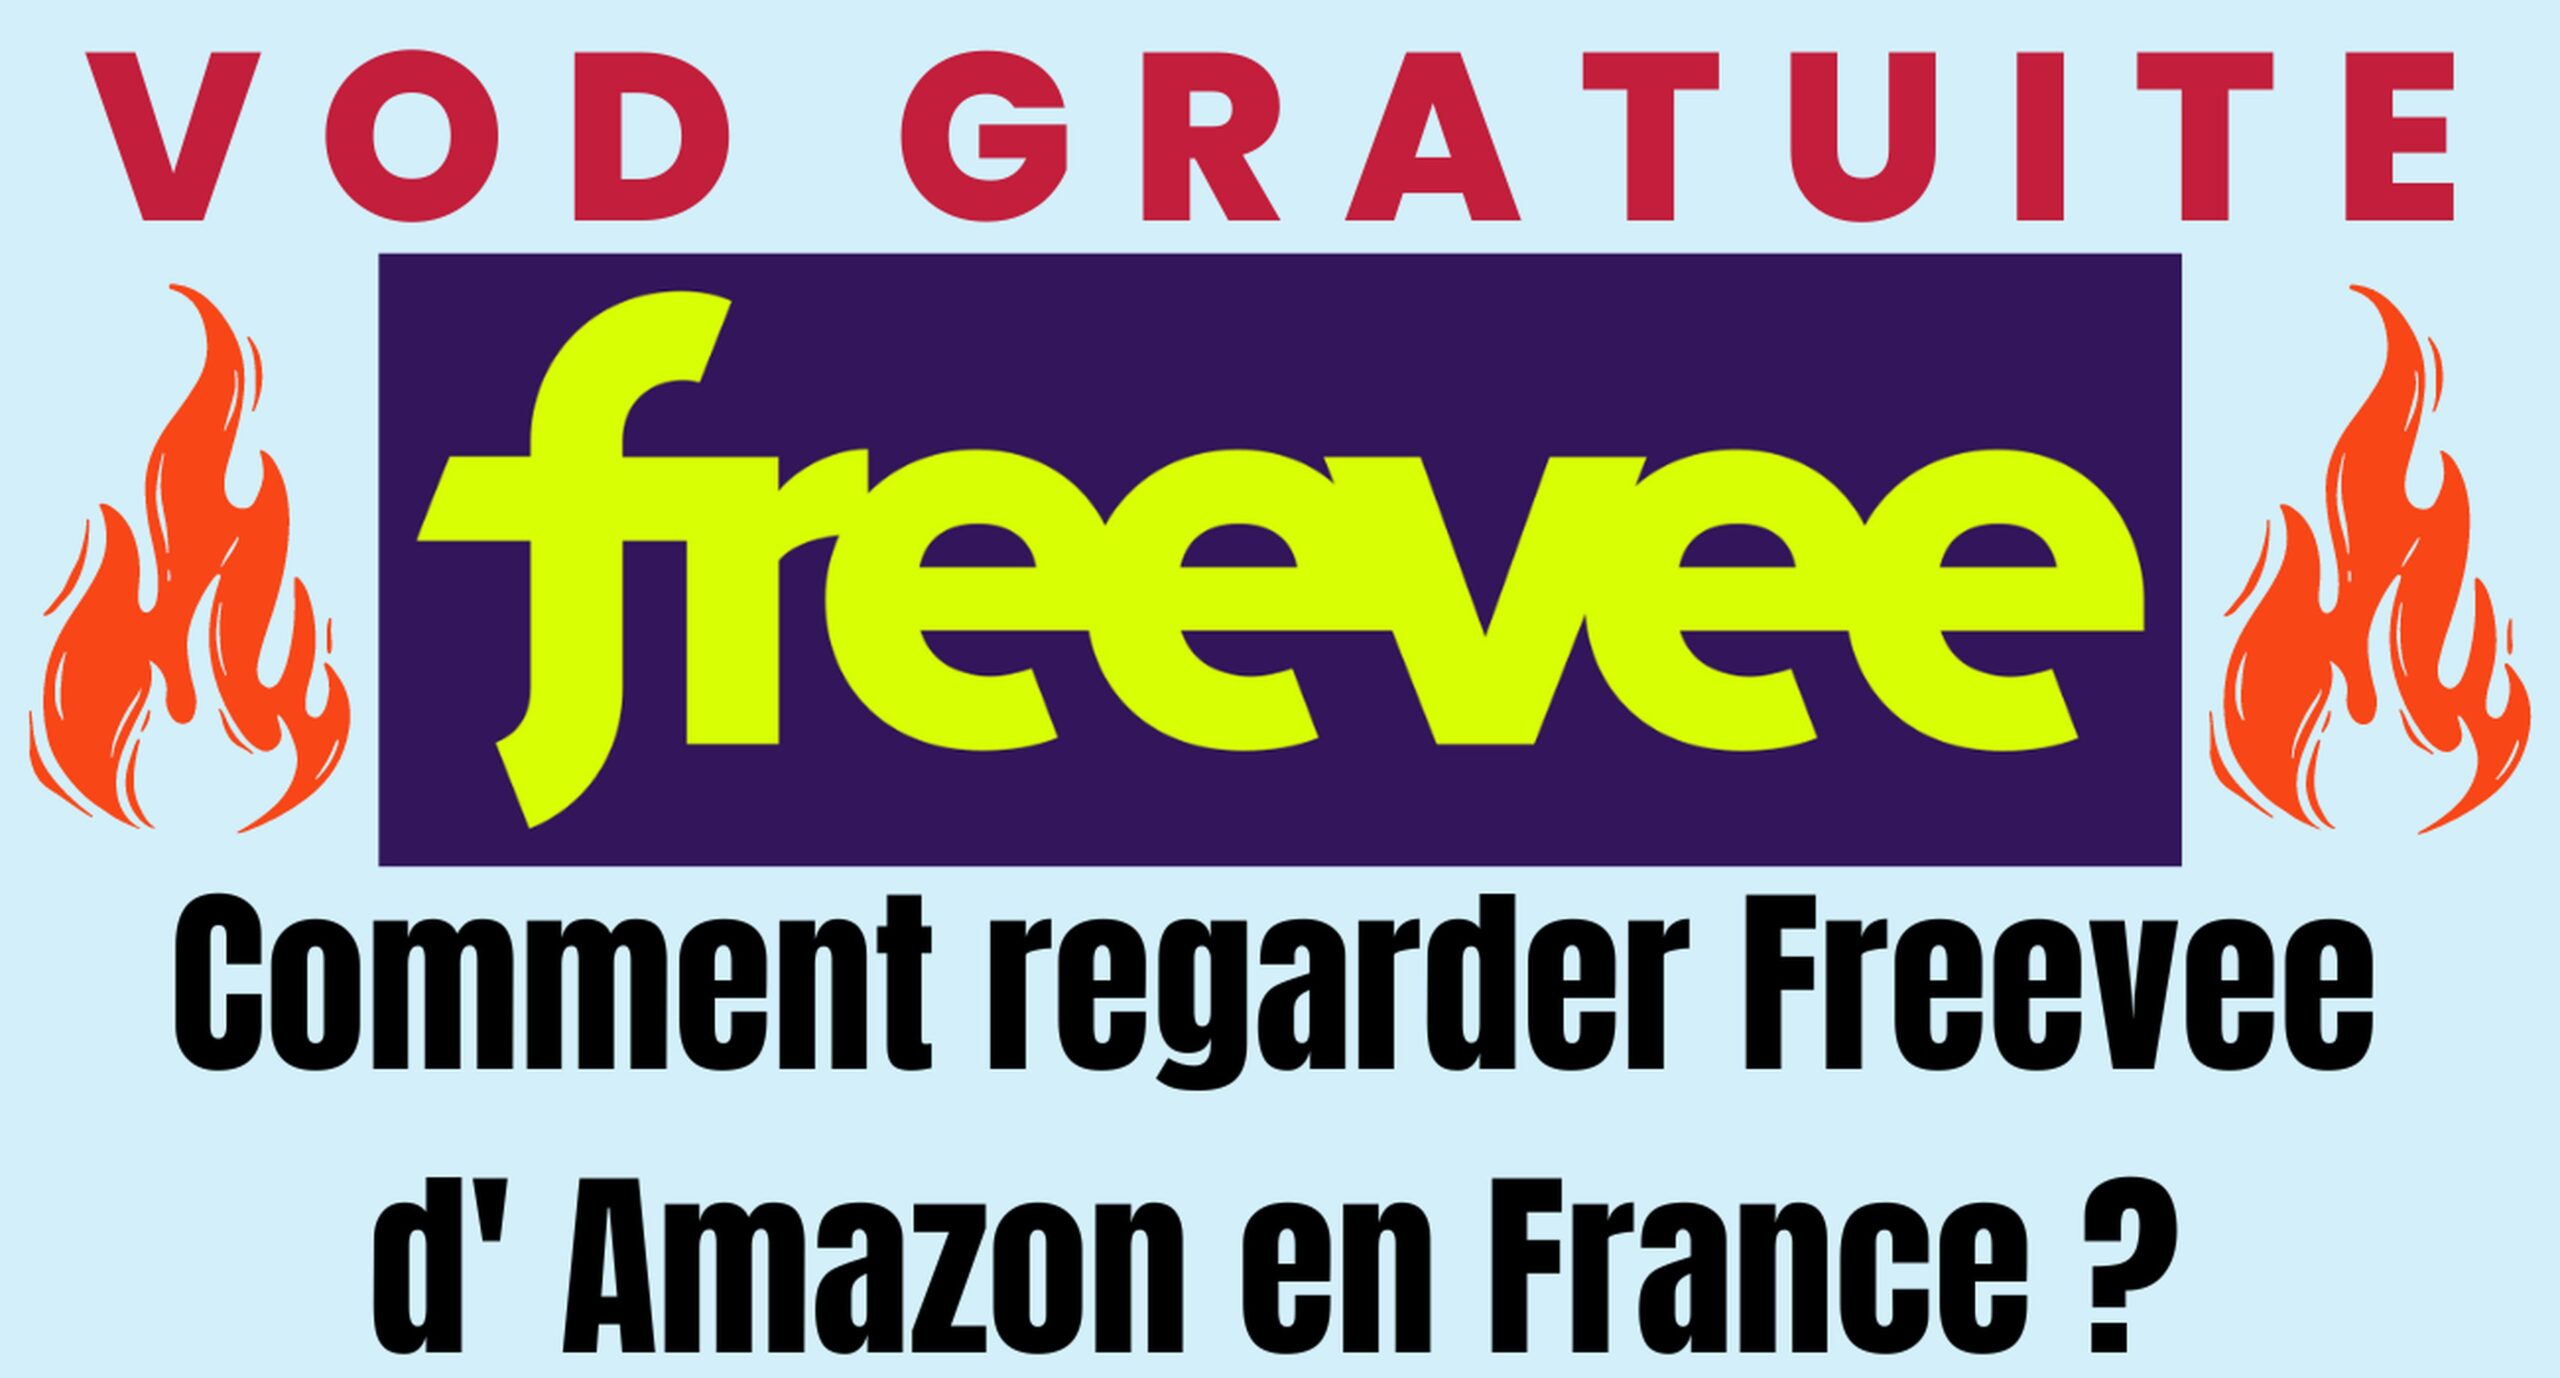 Freevee VOD - Service de streaming gratuit d’ Amazon 3